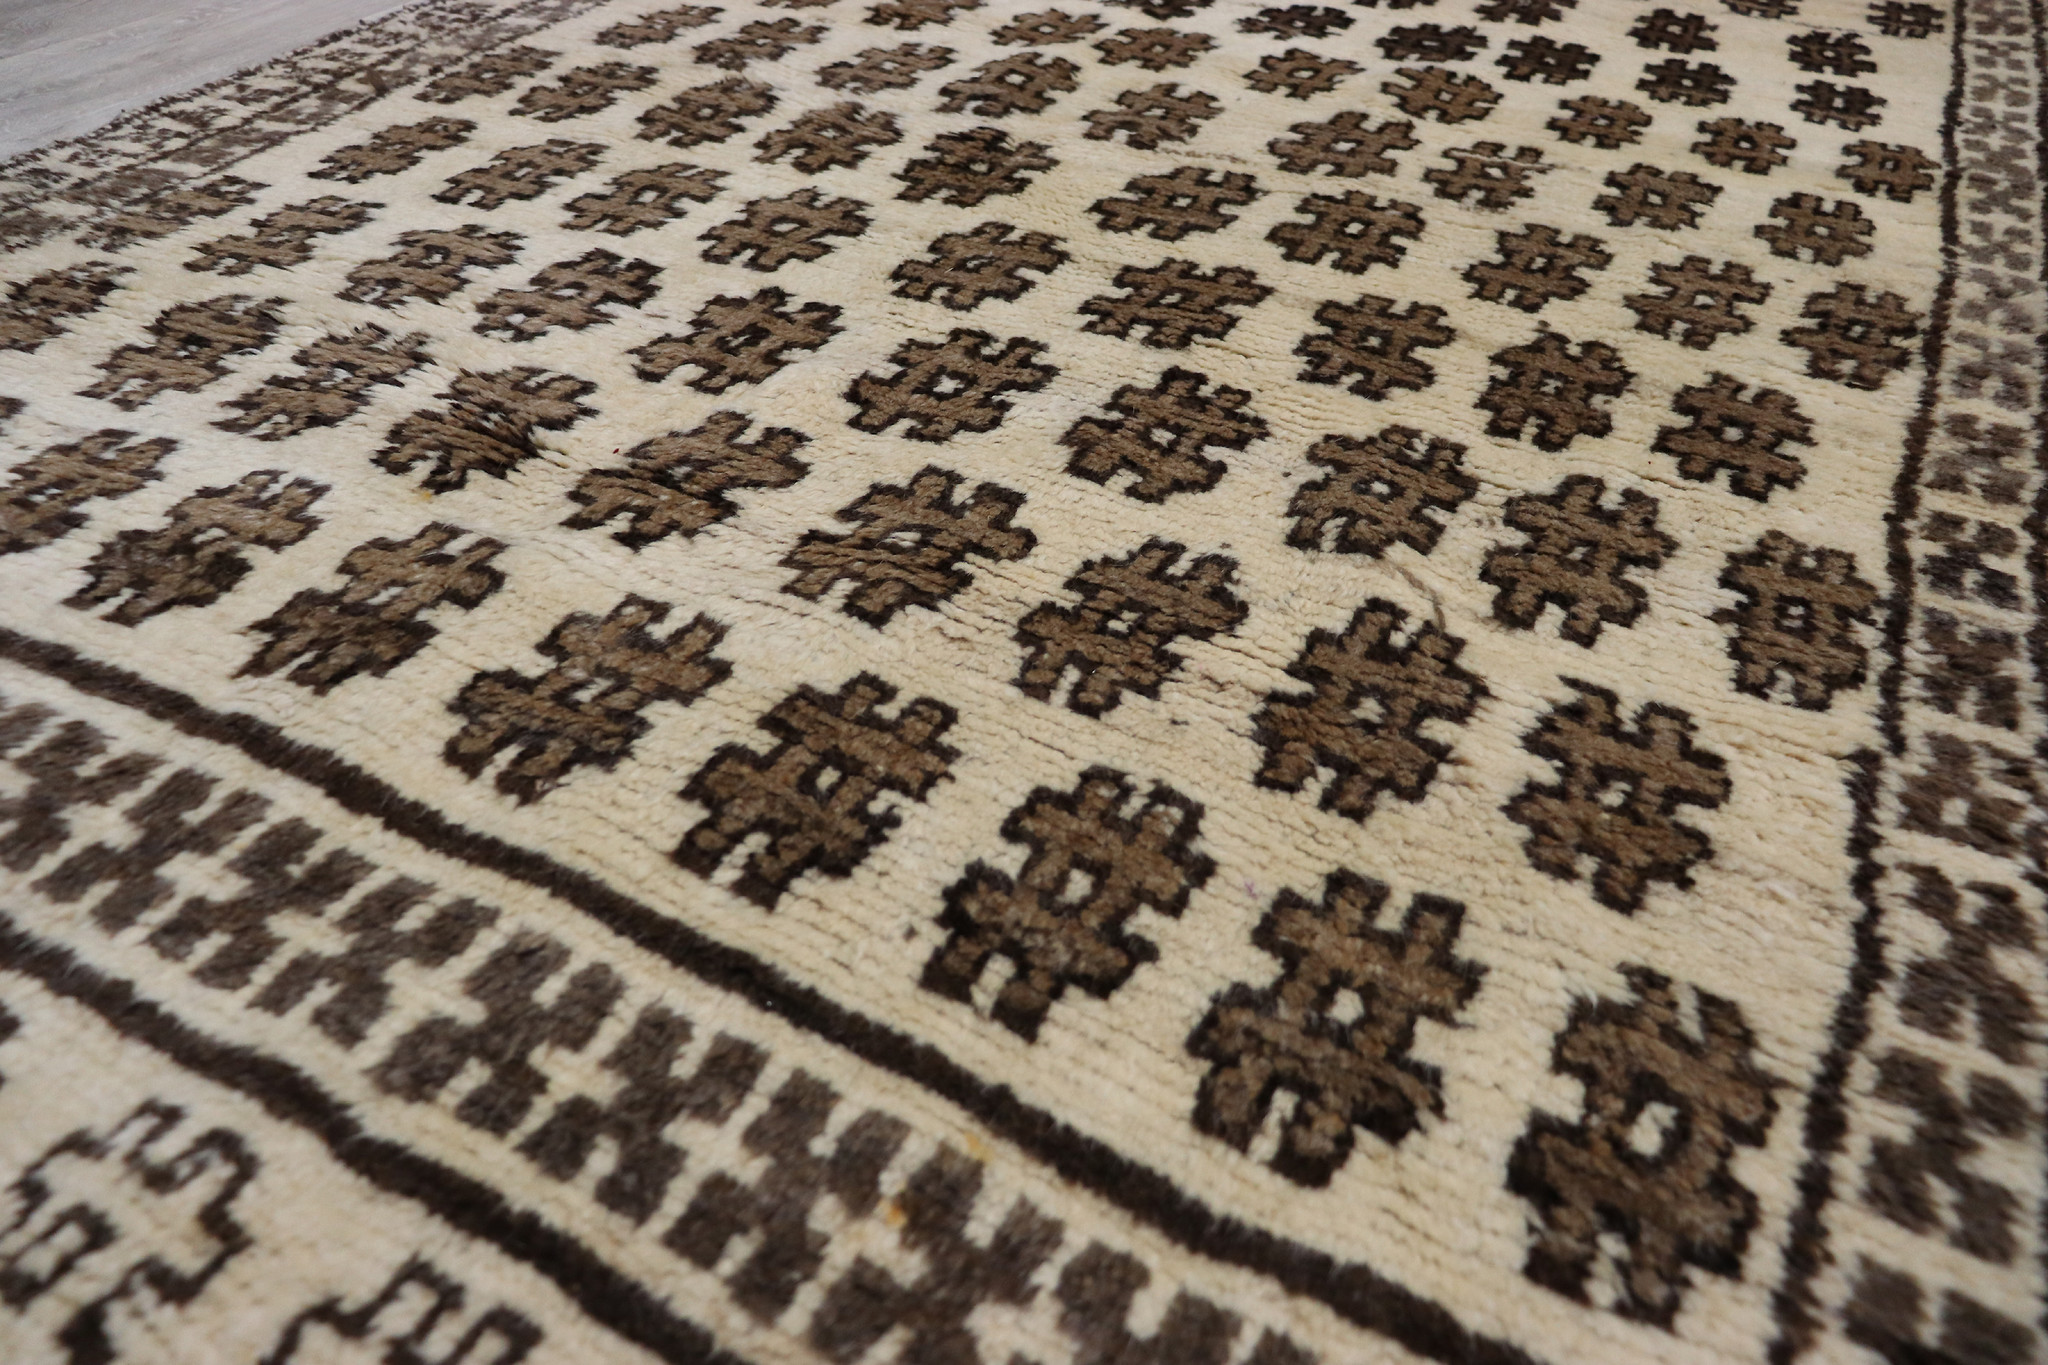 240x150 cm Antique tribal Nomadic Beloch Vintage hand-knotted carpet rug undyed natural handspun sheep wool froom Afghanistan nawid22/1